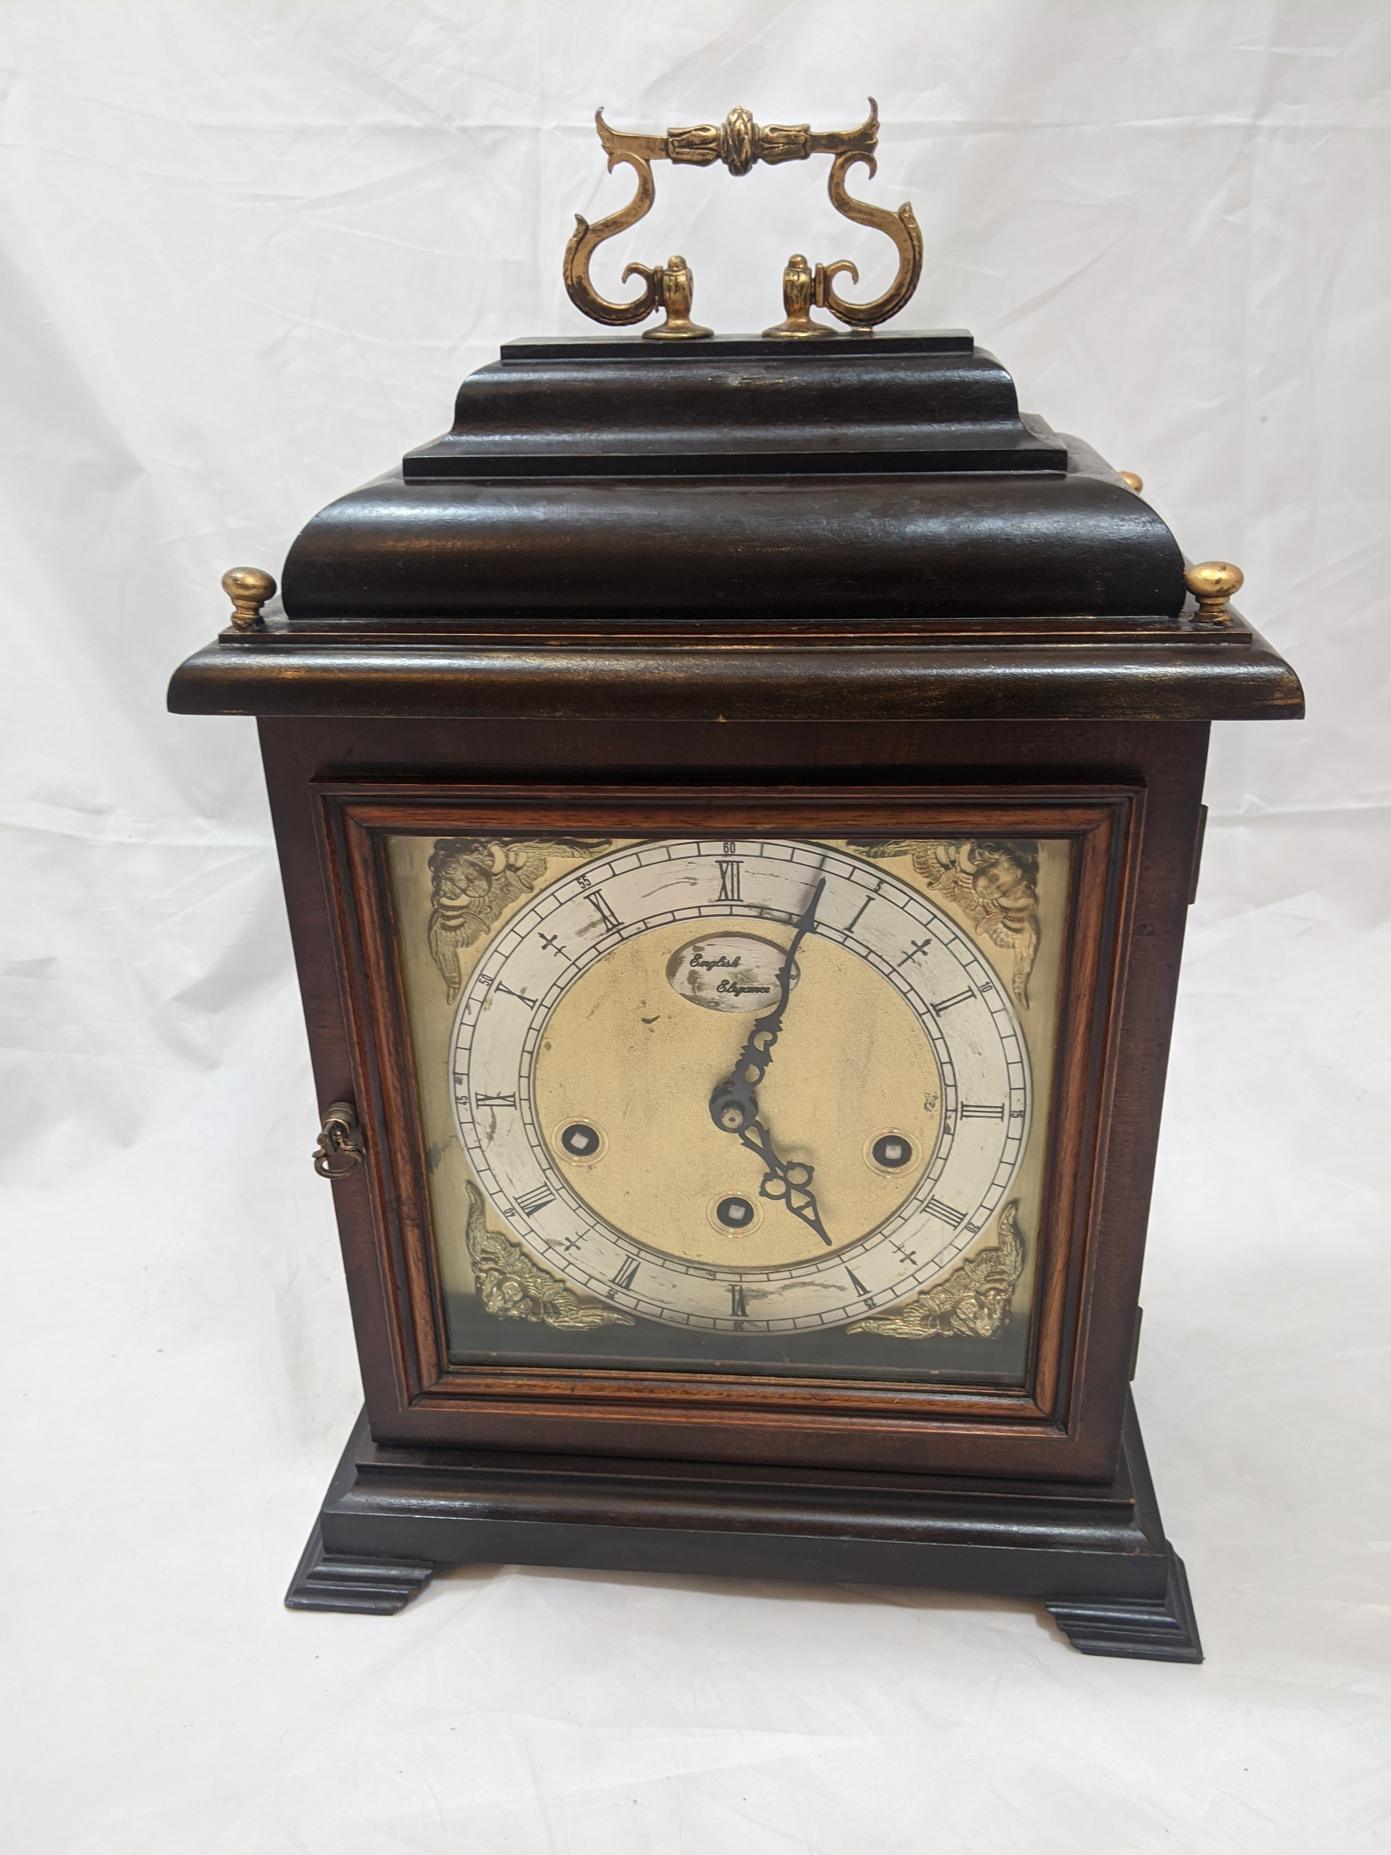 A 19th century mantel clock, three train striking, mahogany cased with fretwork side panels